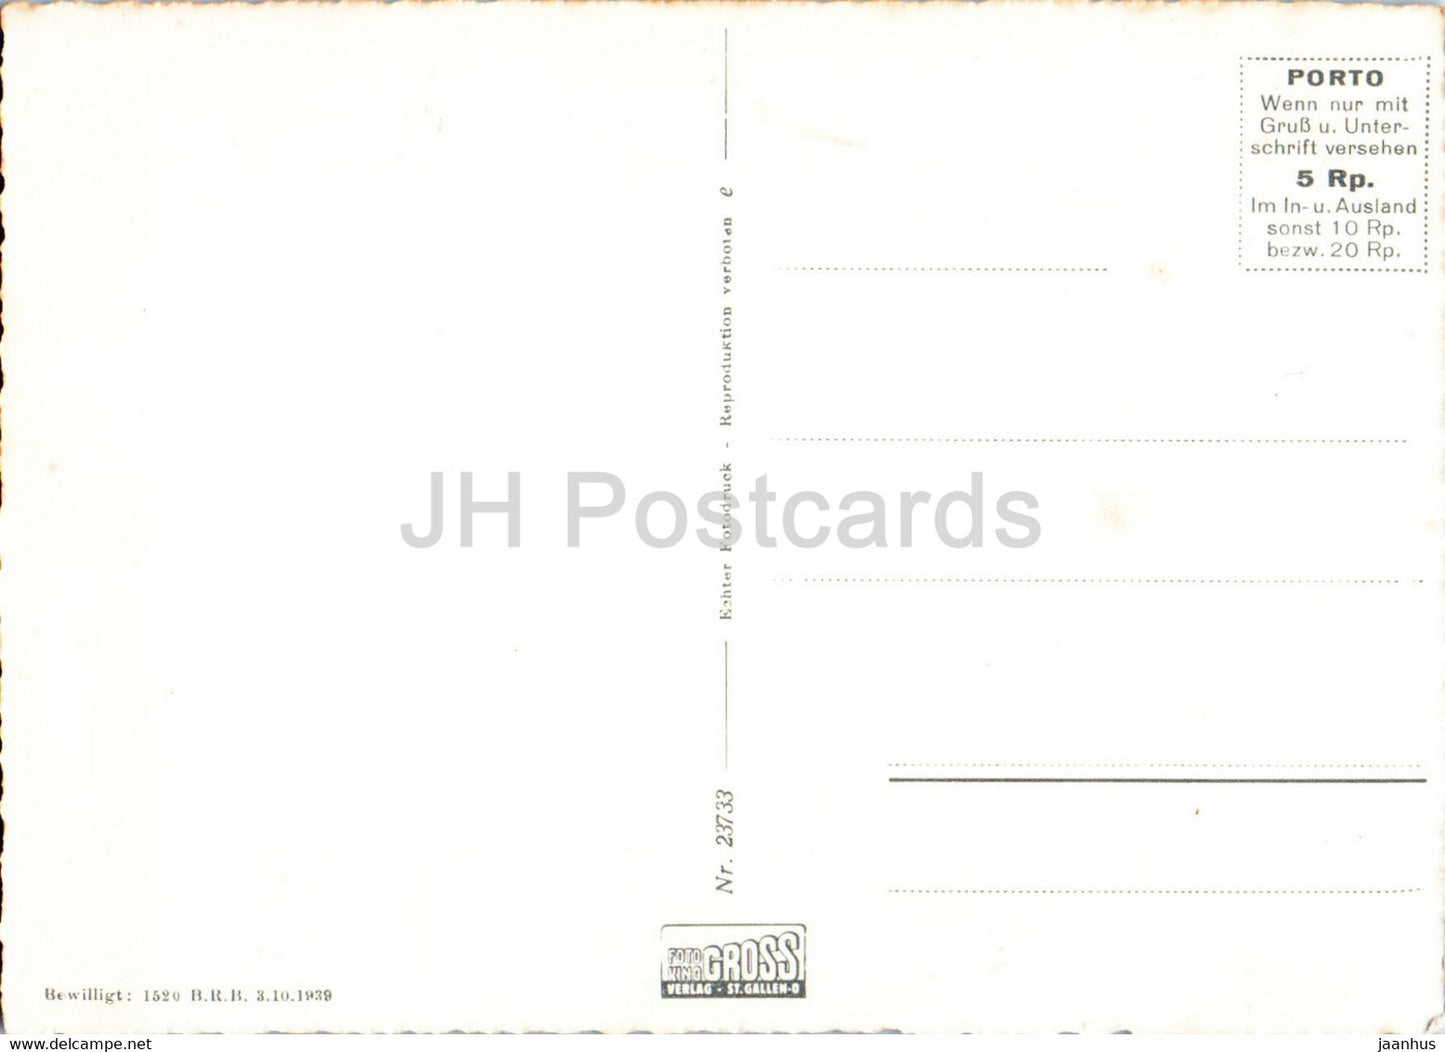 Fahlensee mit Bollenwies & Hohe Hauser - 23733 - old postcard - Switzerland - unused